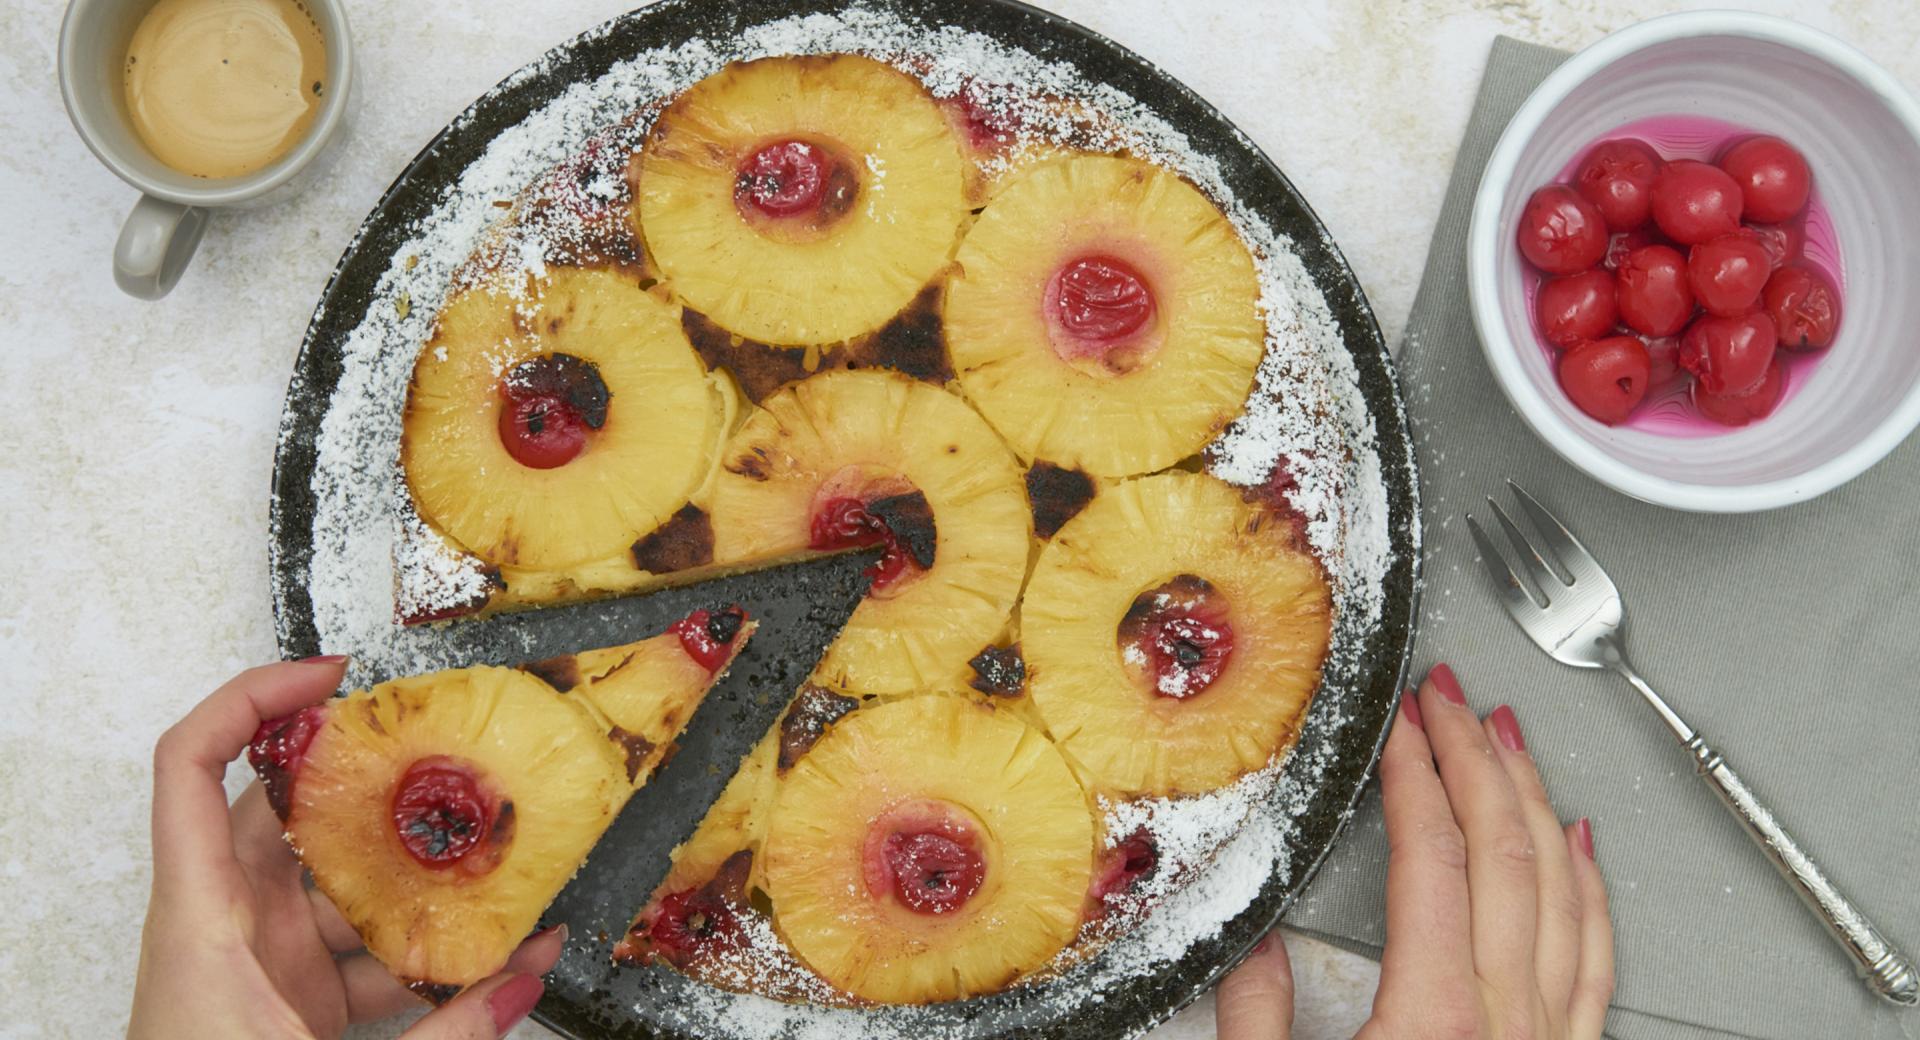  Pineapple cake with cherries